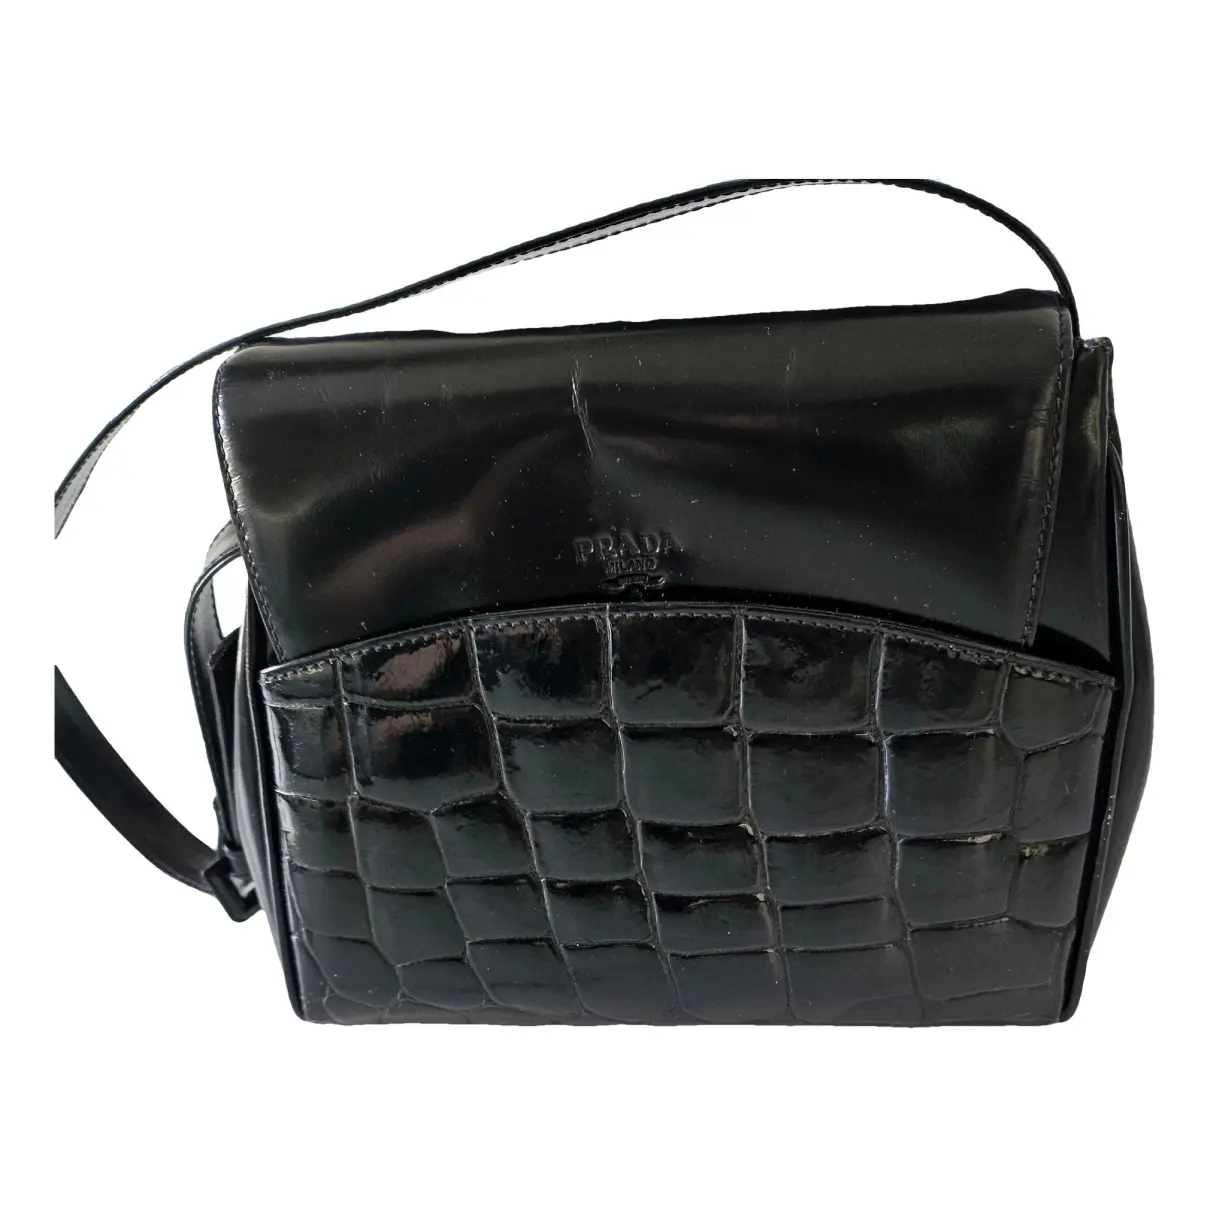 Spectrum leather handbag